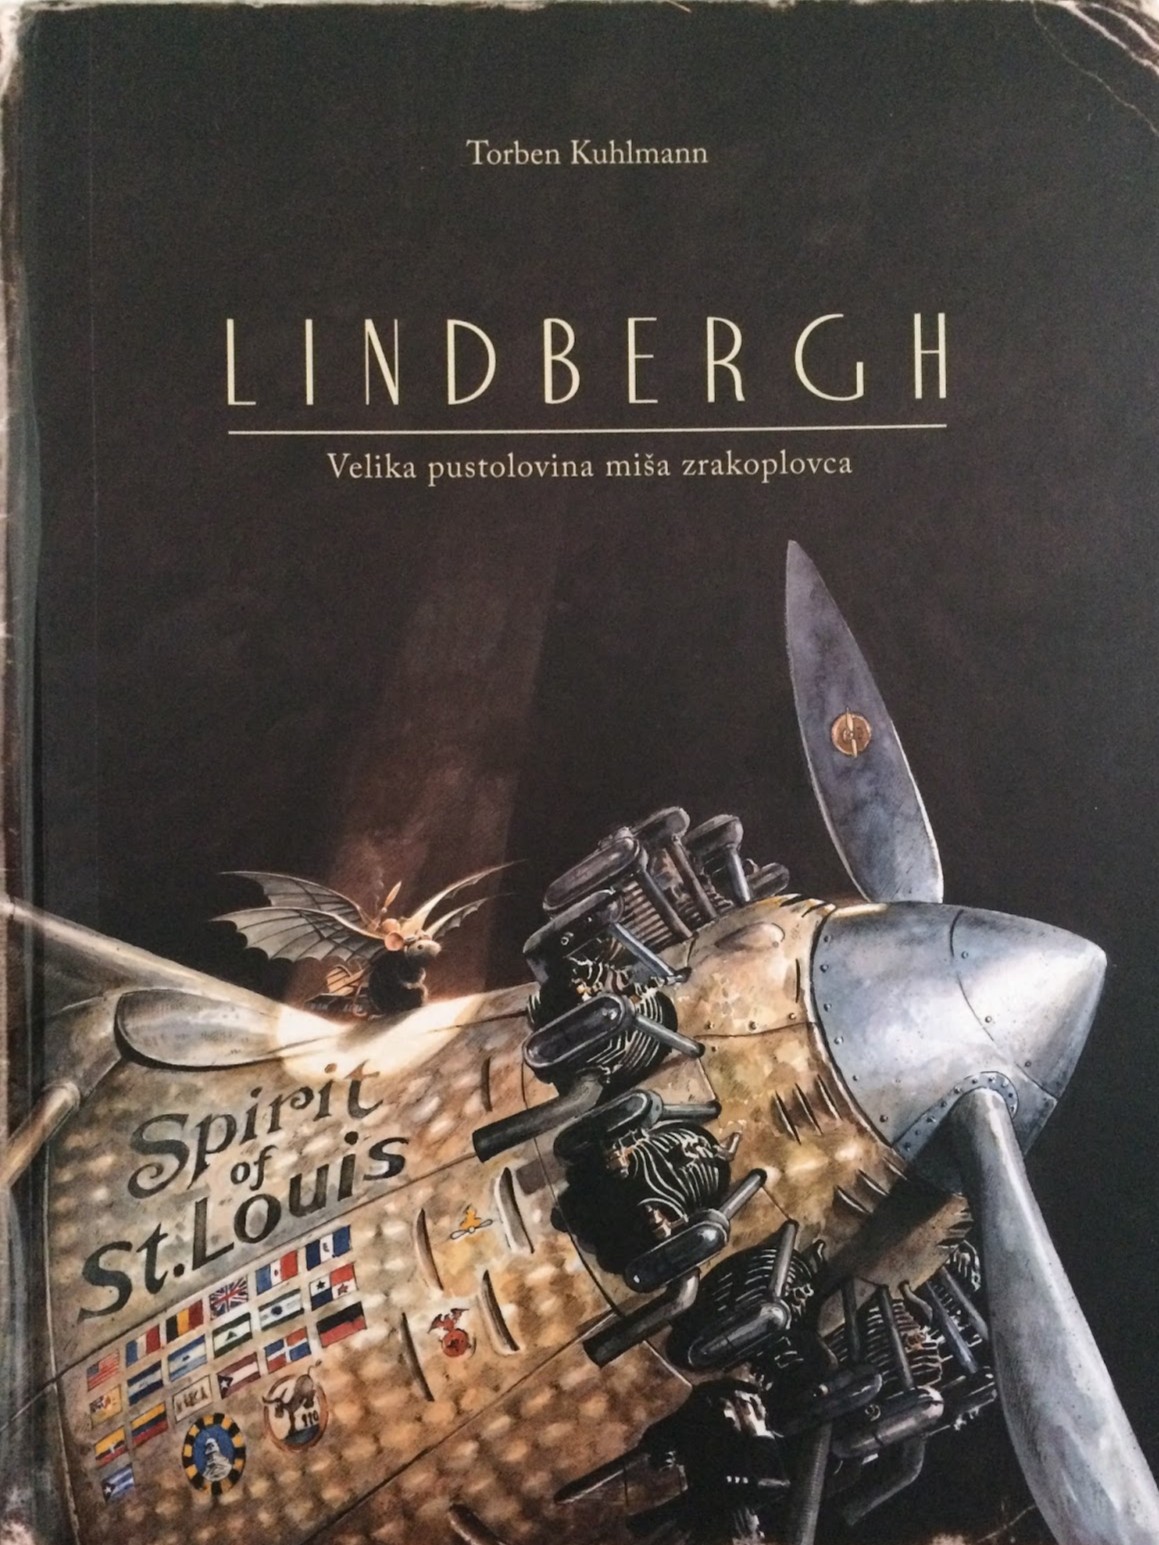 LINDBERGH - Velika pustolovina miša zrakoplovca